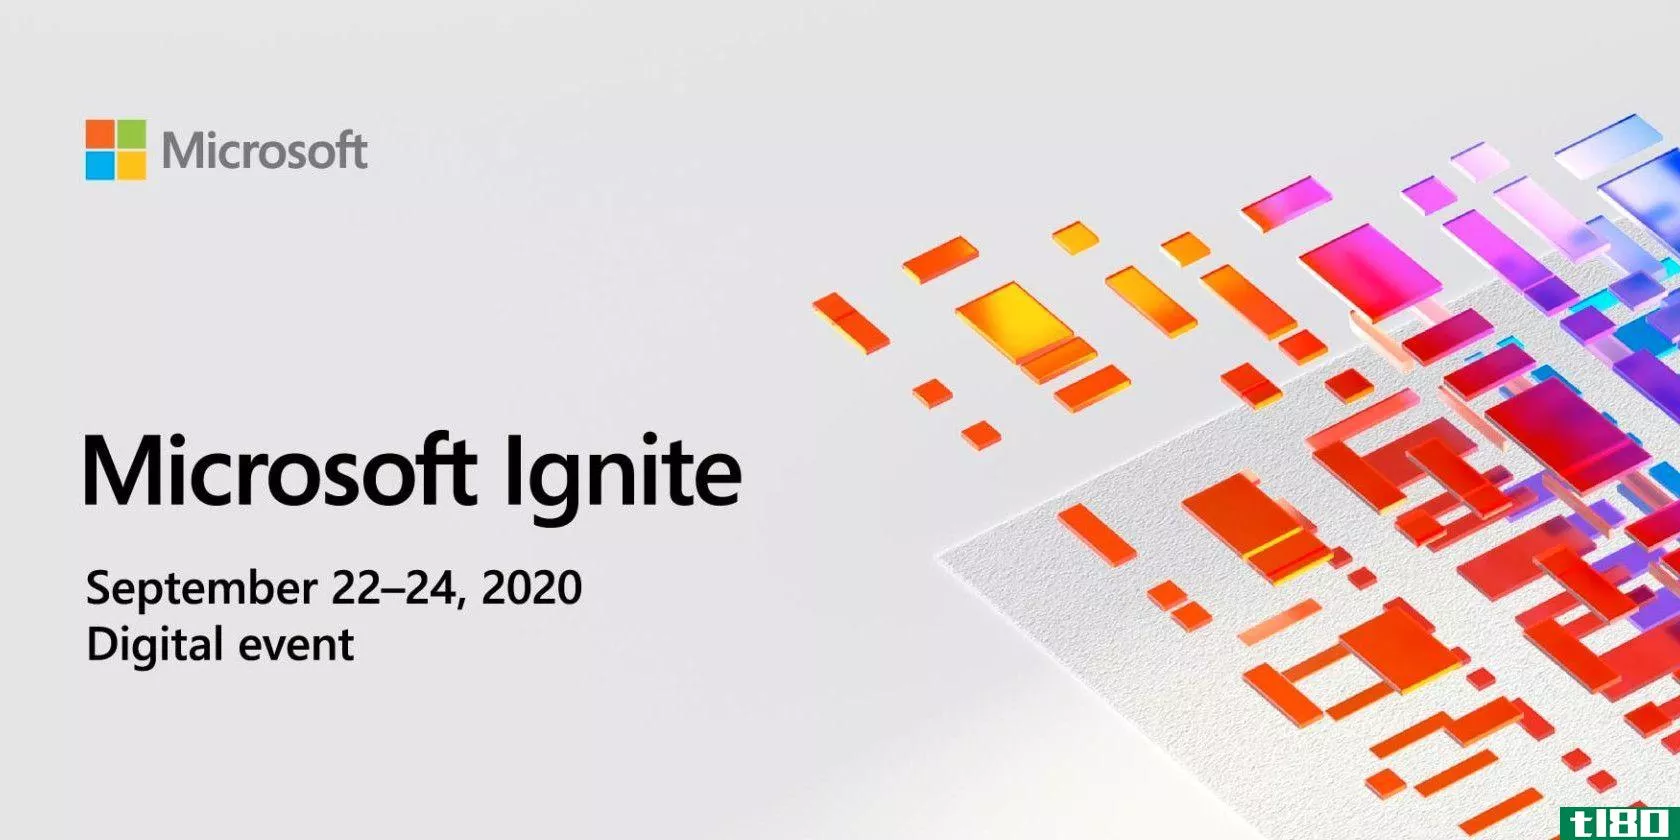 The Microsoft Ignite logo